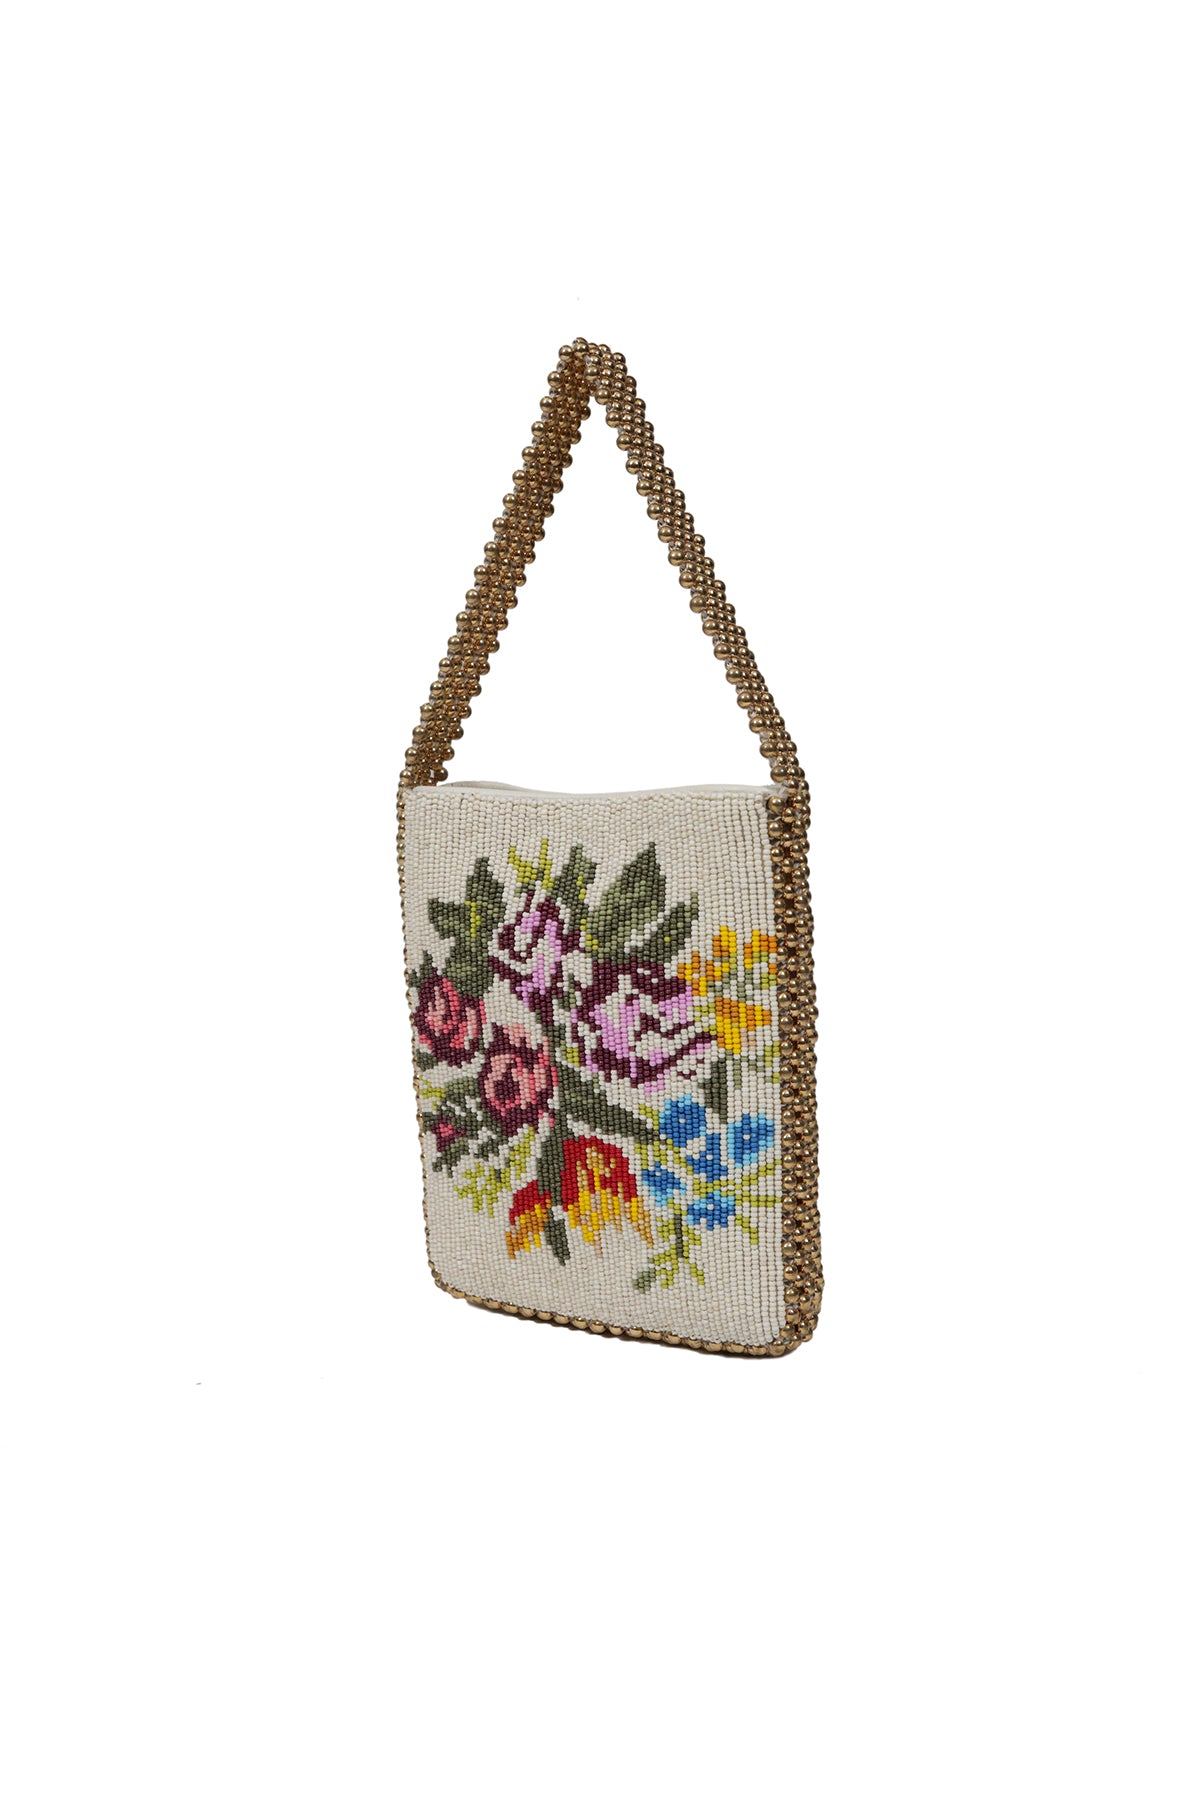 Gulab Embellished Potli Bag